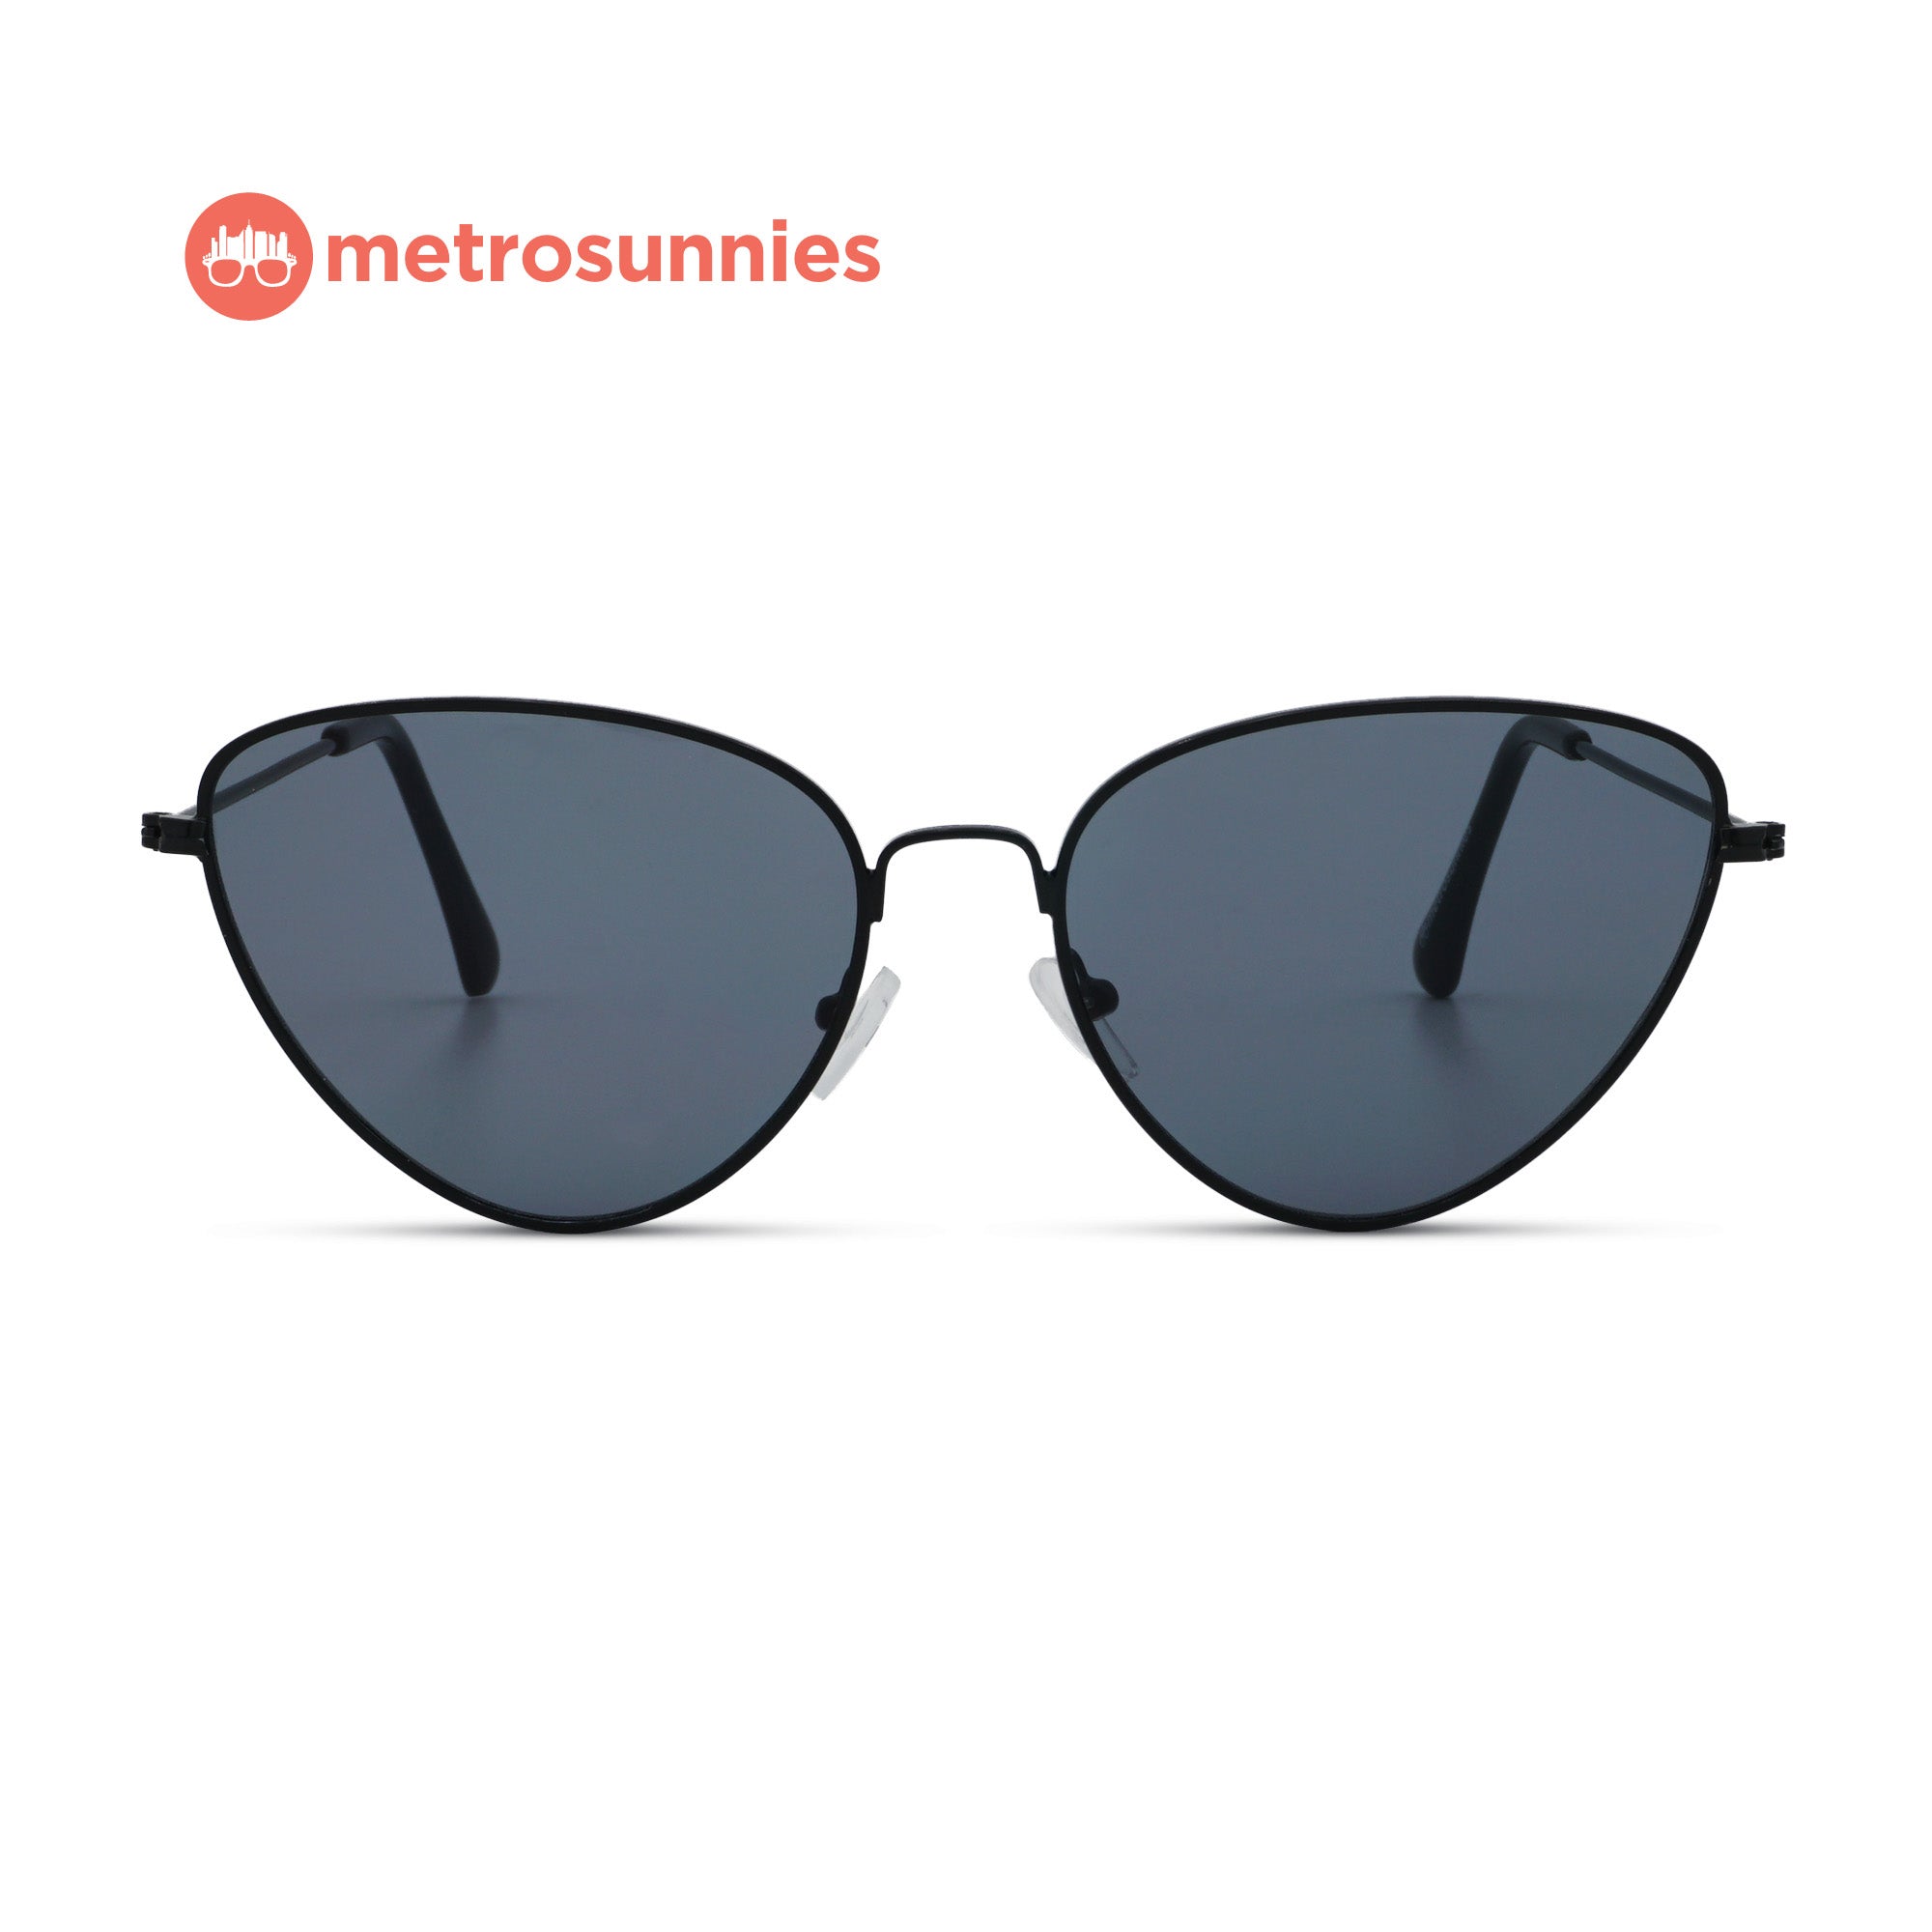 MetroSunnies Meg Sunnies (Onyx) / Sunglasses with UV400 Protection / Fashion Eyewear Unisex